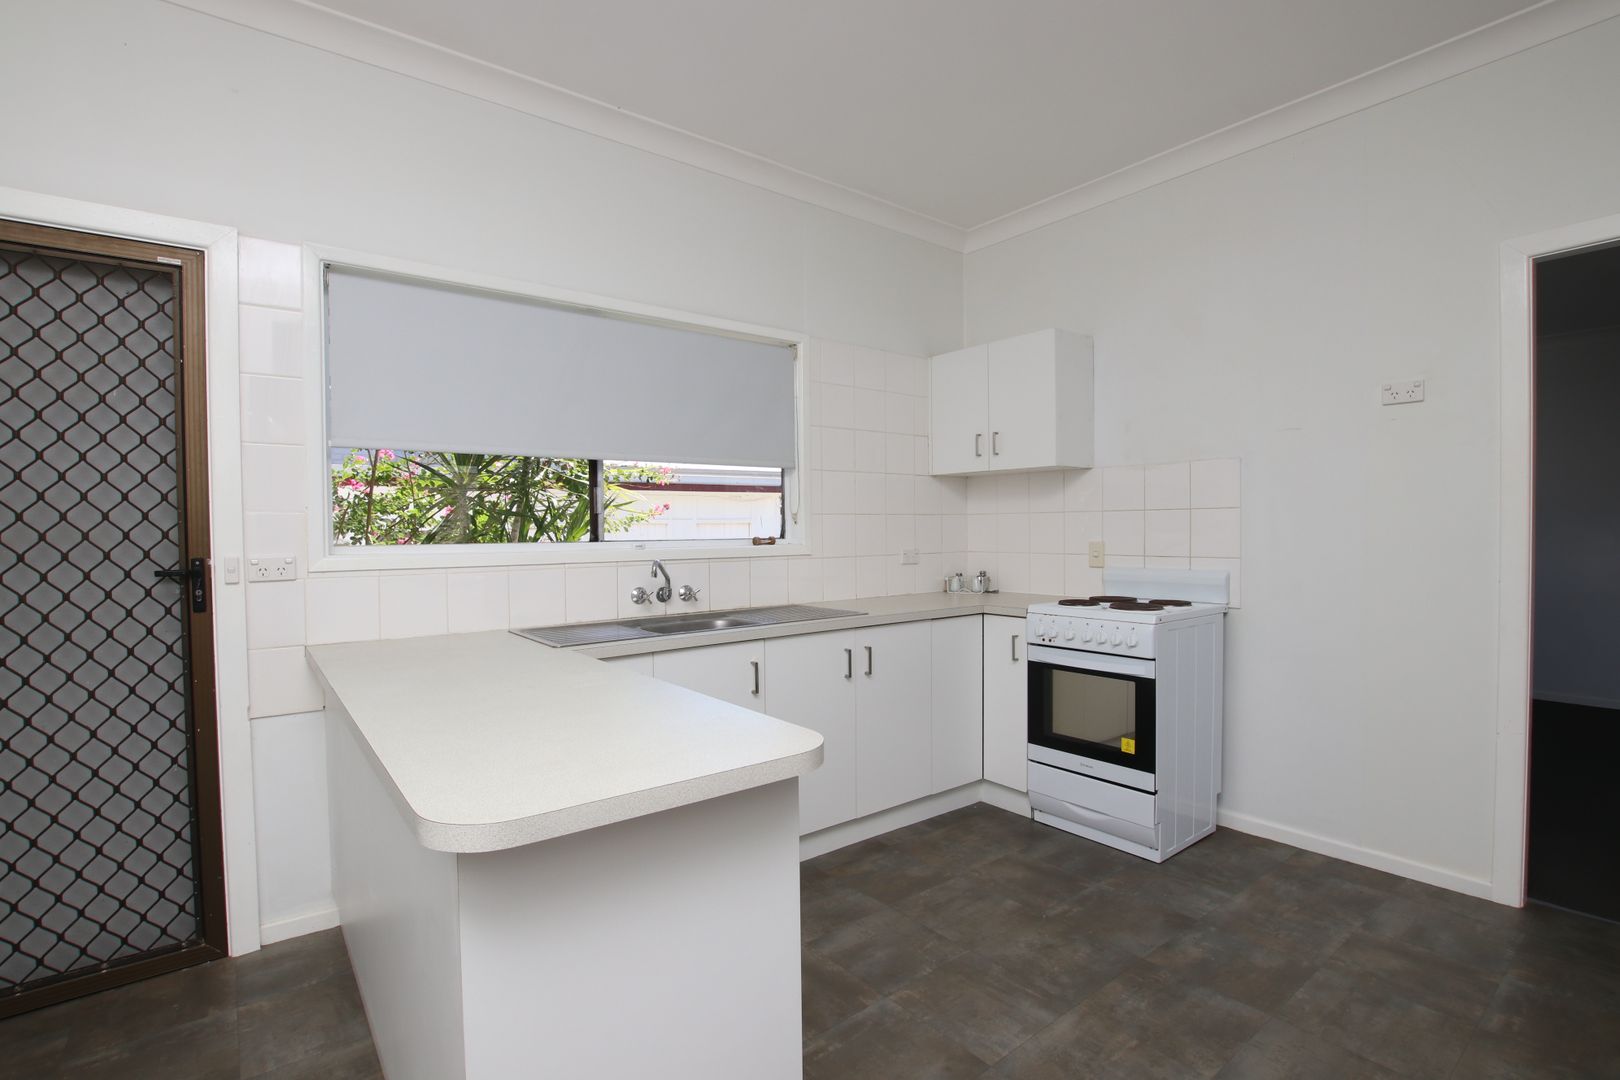 2 bedrooms House in 3/56 Owen St BALLINA NSW, 2478